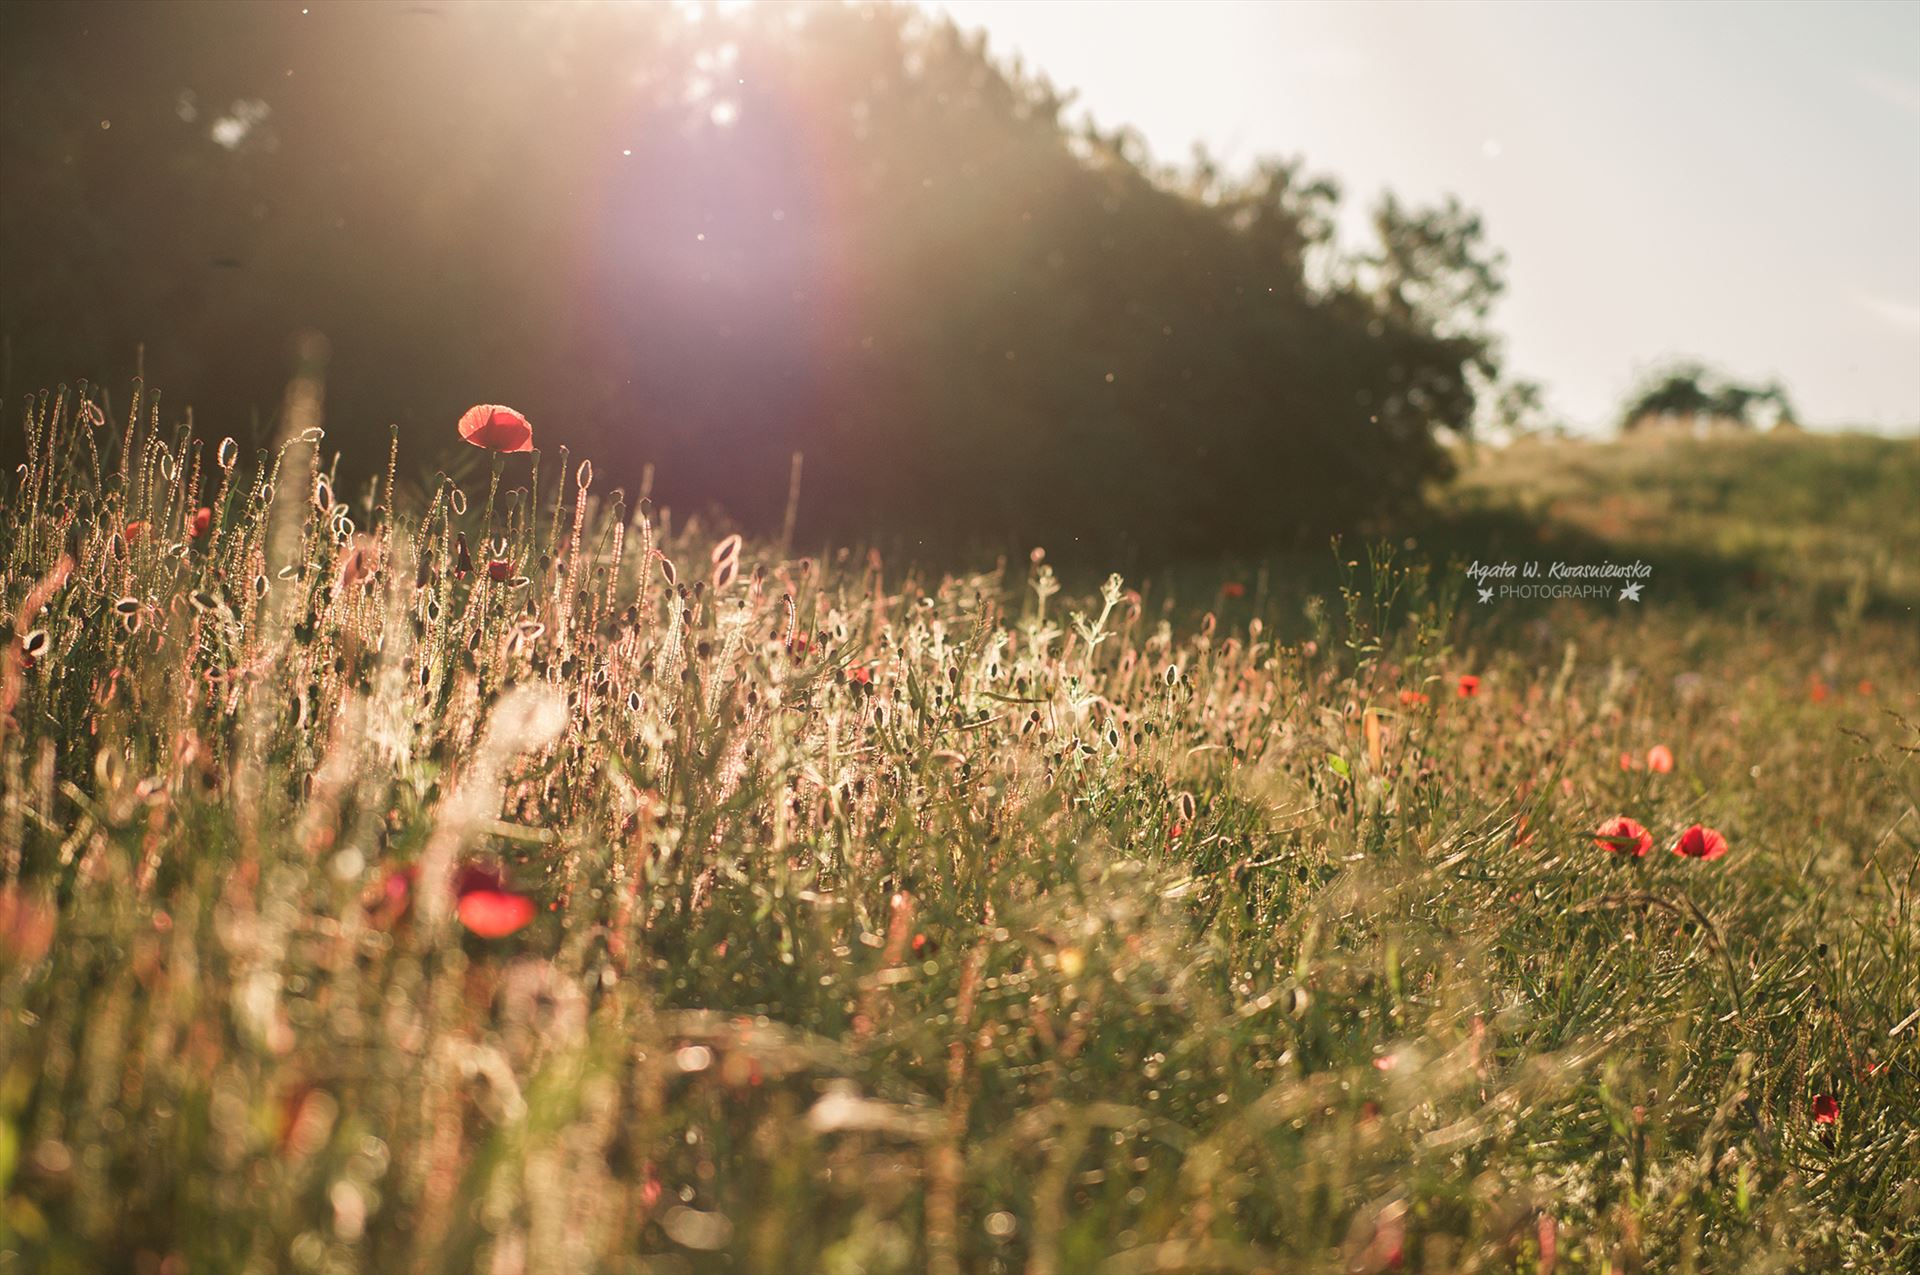 A meadow with poppies  by Agata W. Kwasniewska Photography